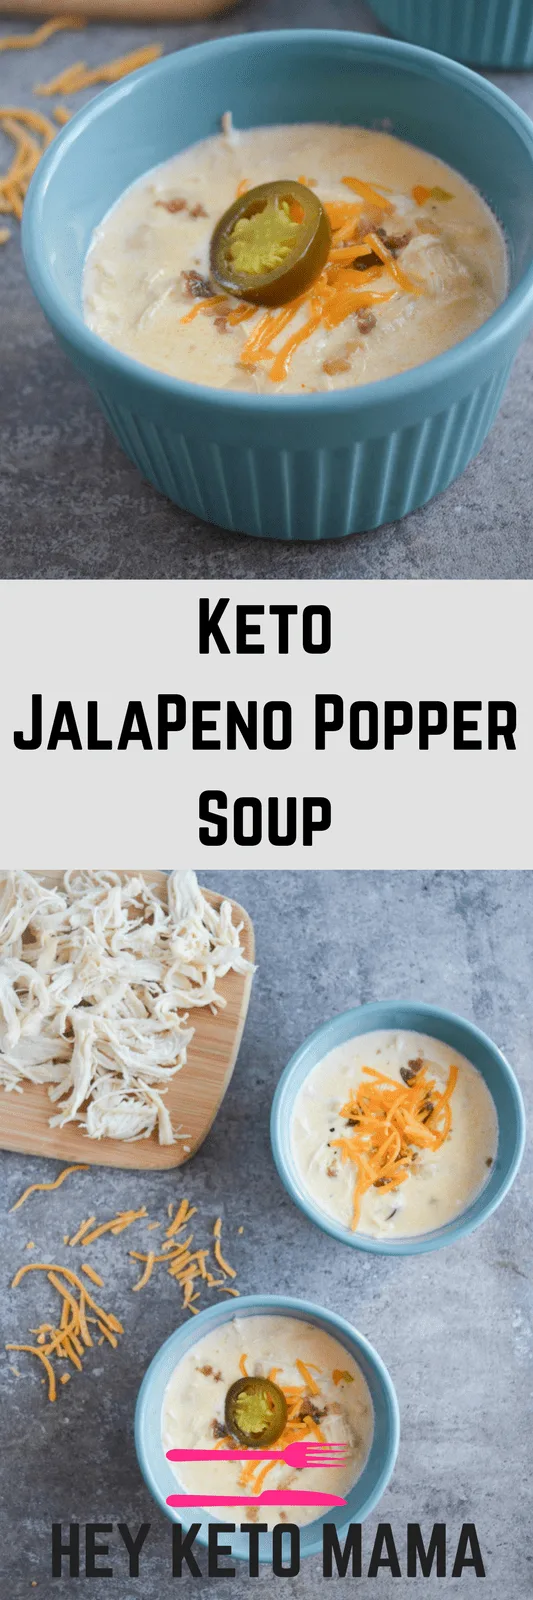 Keto Jalapeno Popper Soup - Hey Keto Mama